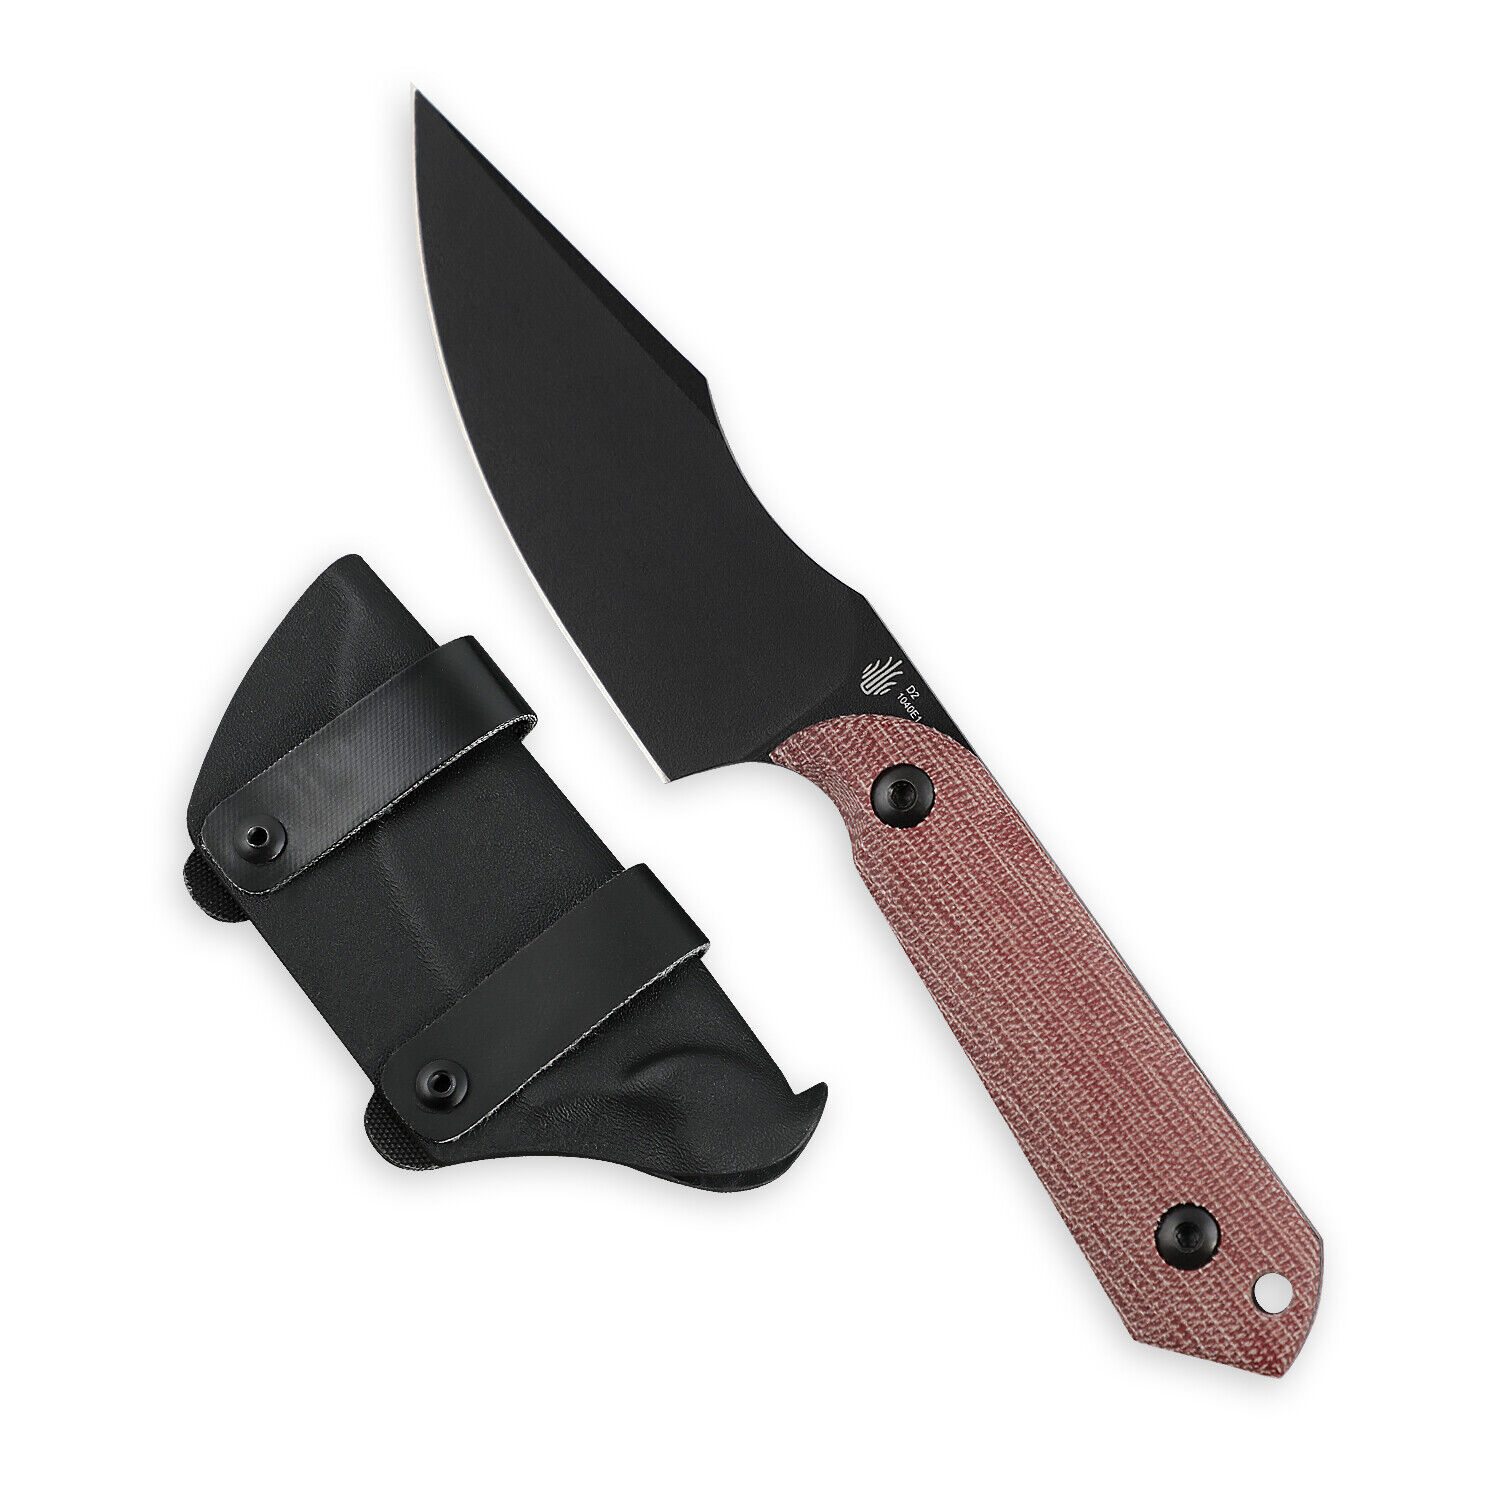 Kizer Deadpool Harpoon Micarta Handle Fixed Blade Knife D2 Black Red 1040E1